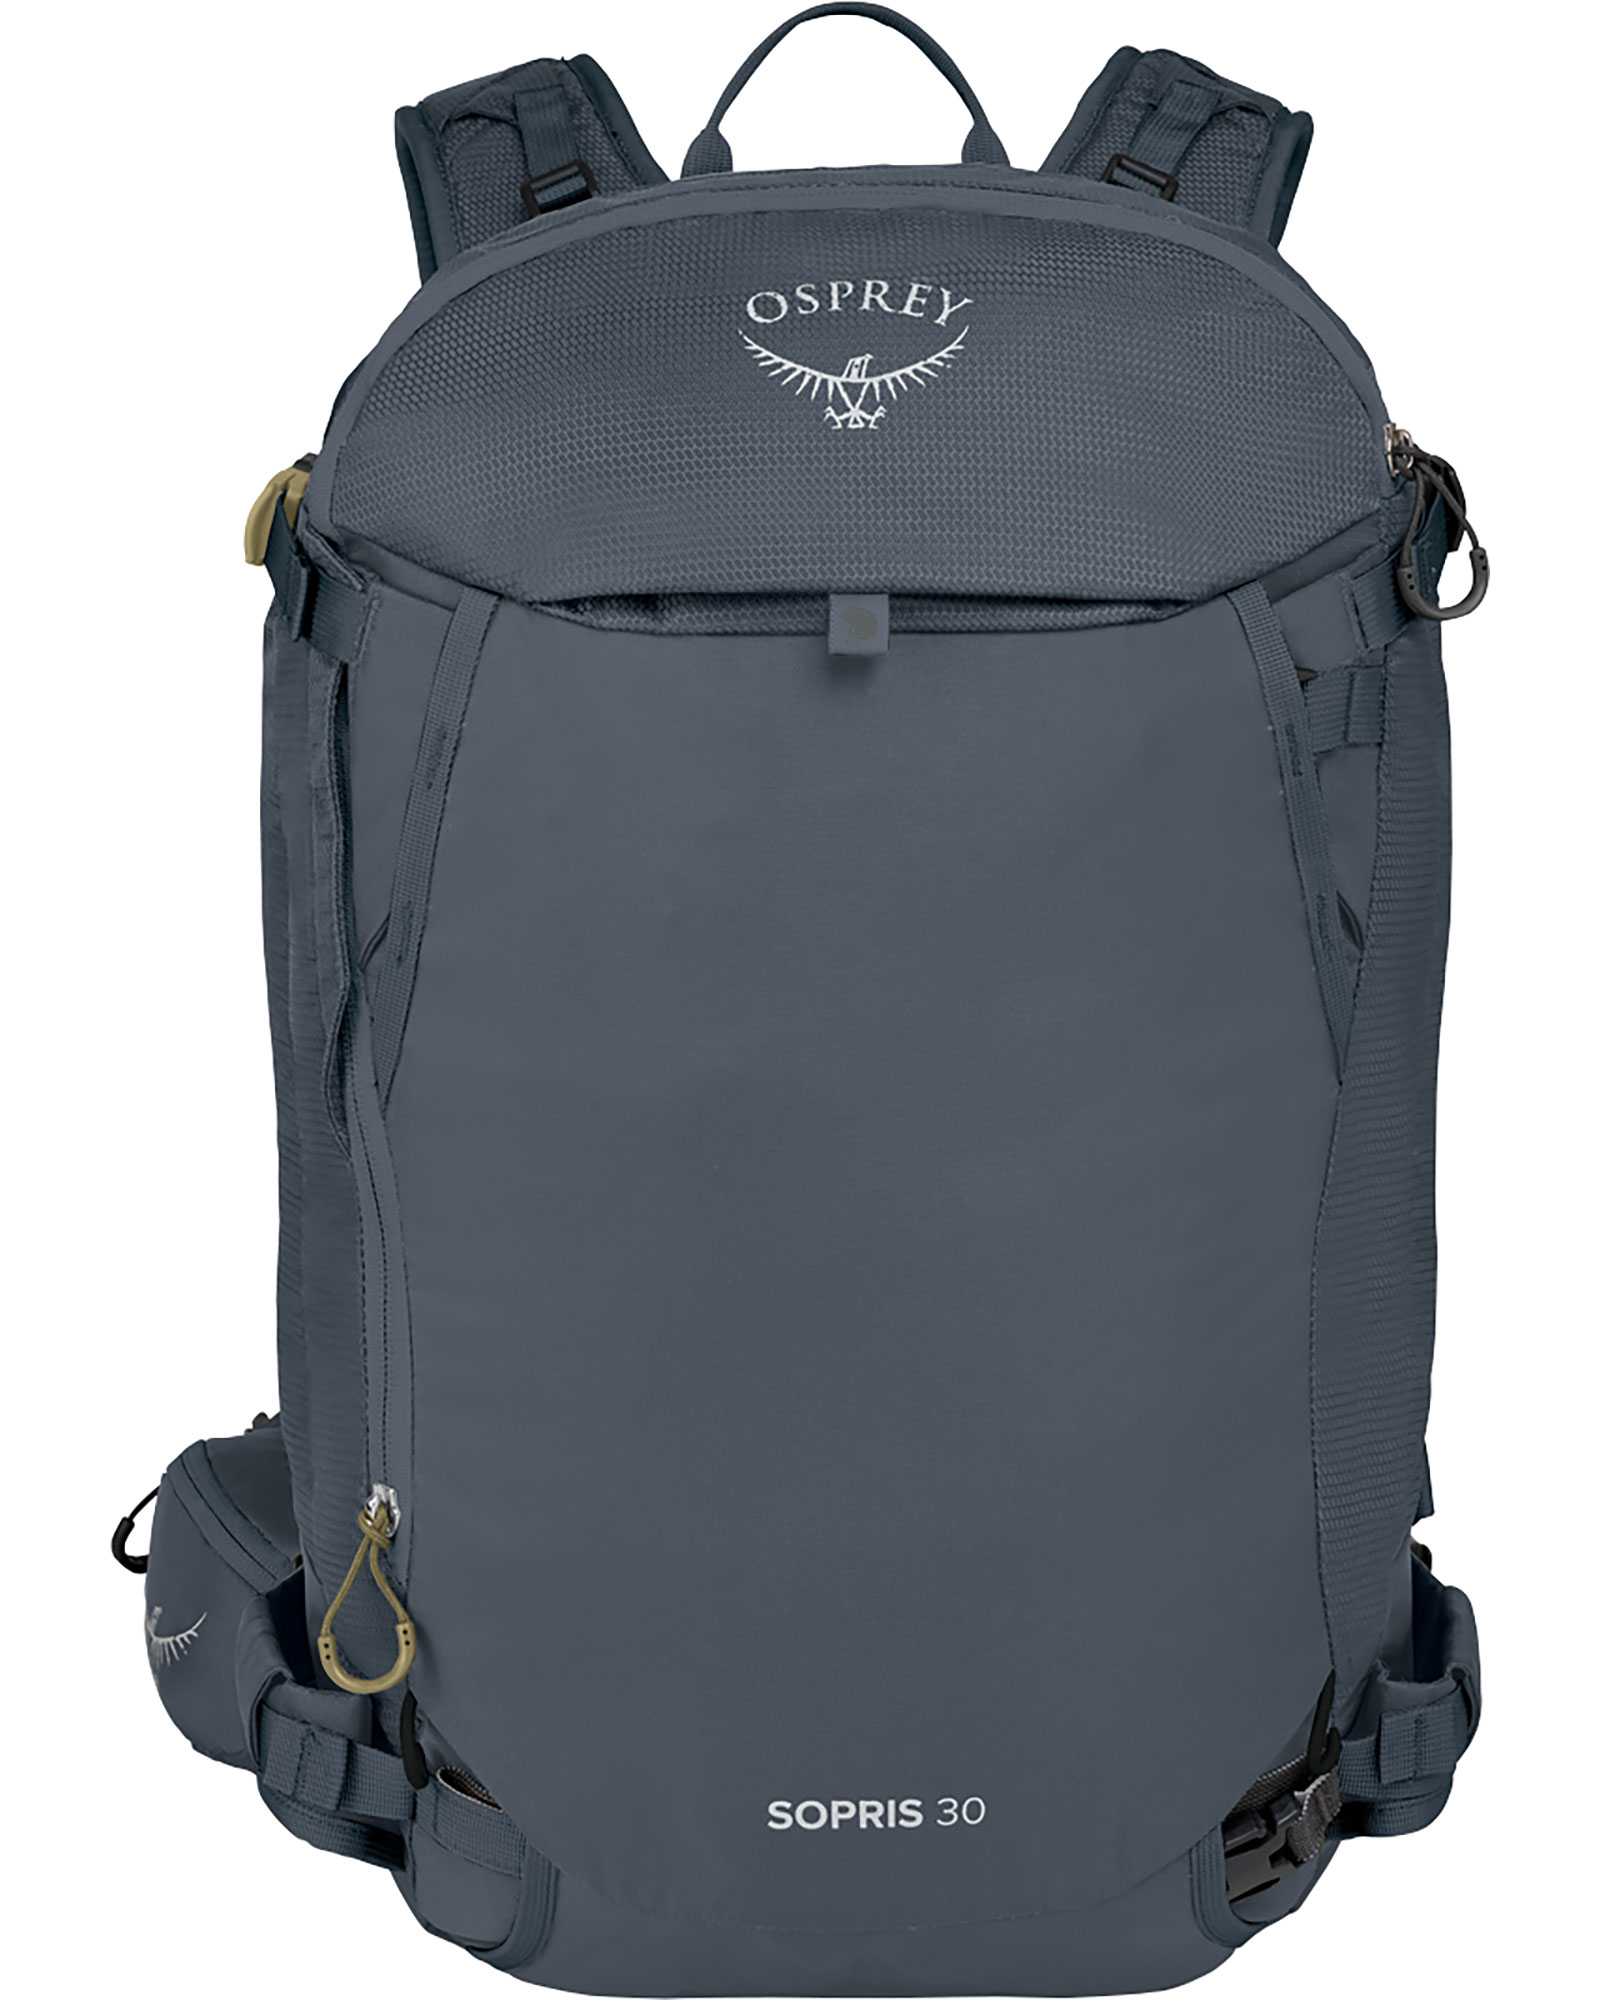 Osprey Sopris 30 Women’s Backpack - Tungsten Grey